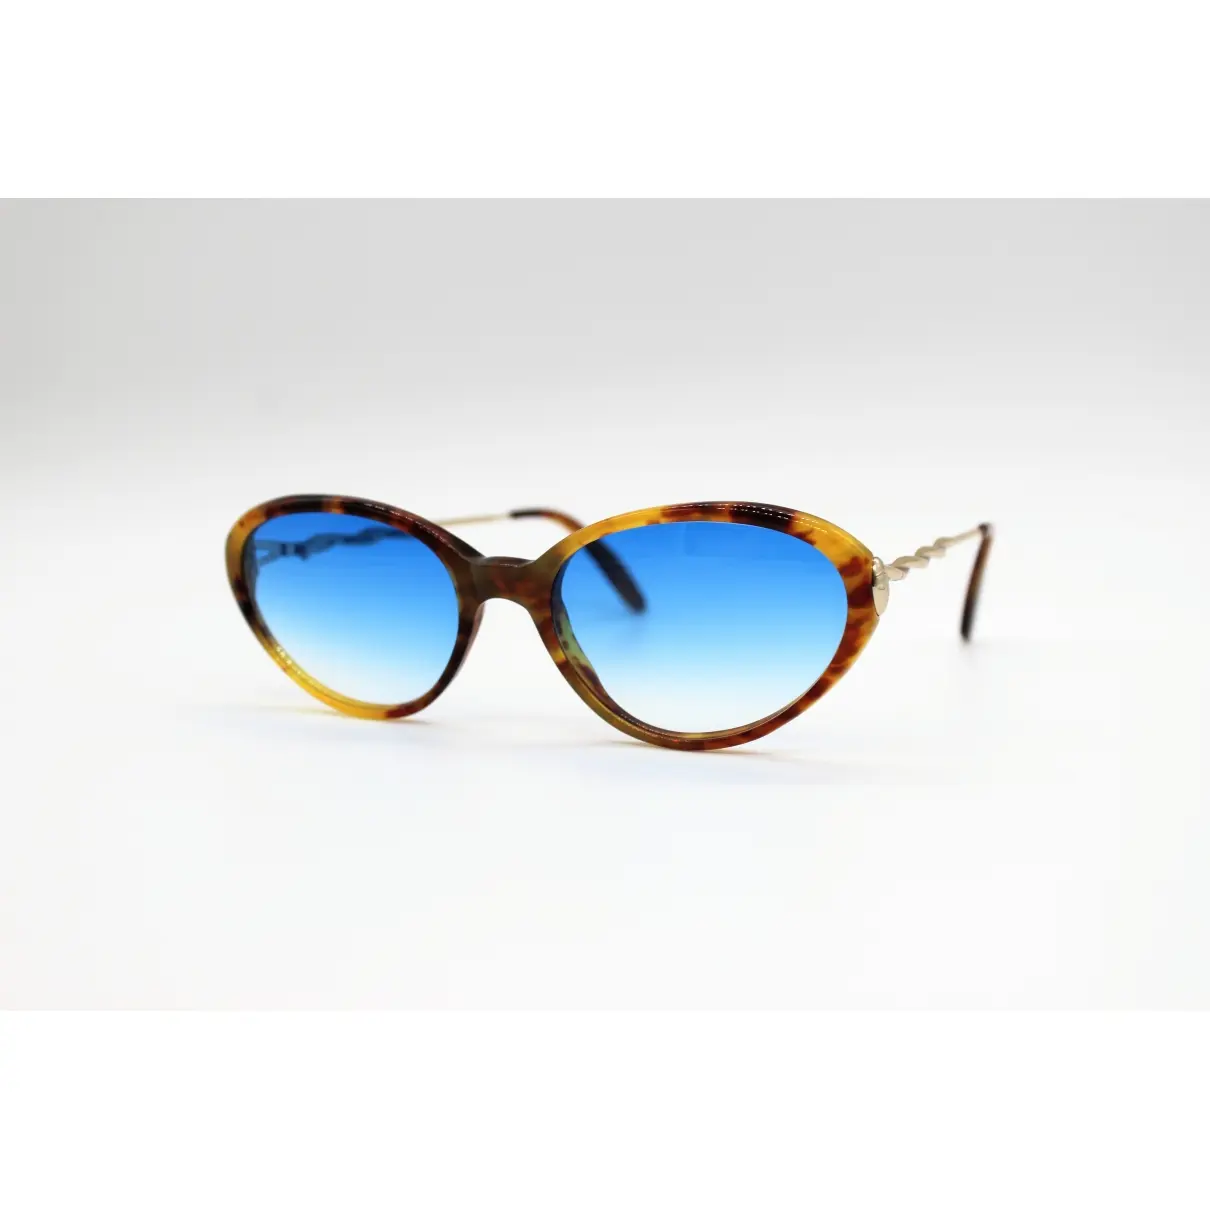 Trussardi Oversized sunglasses for sale - Vintage